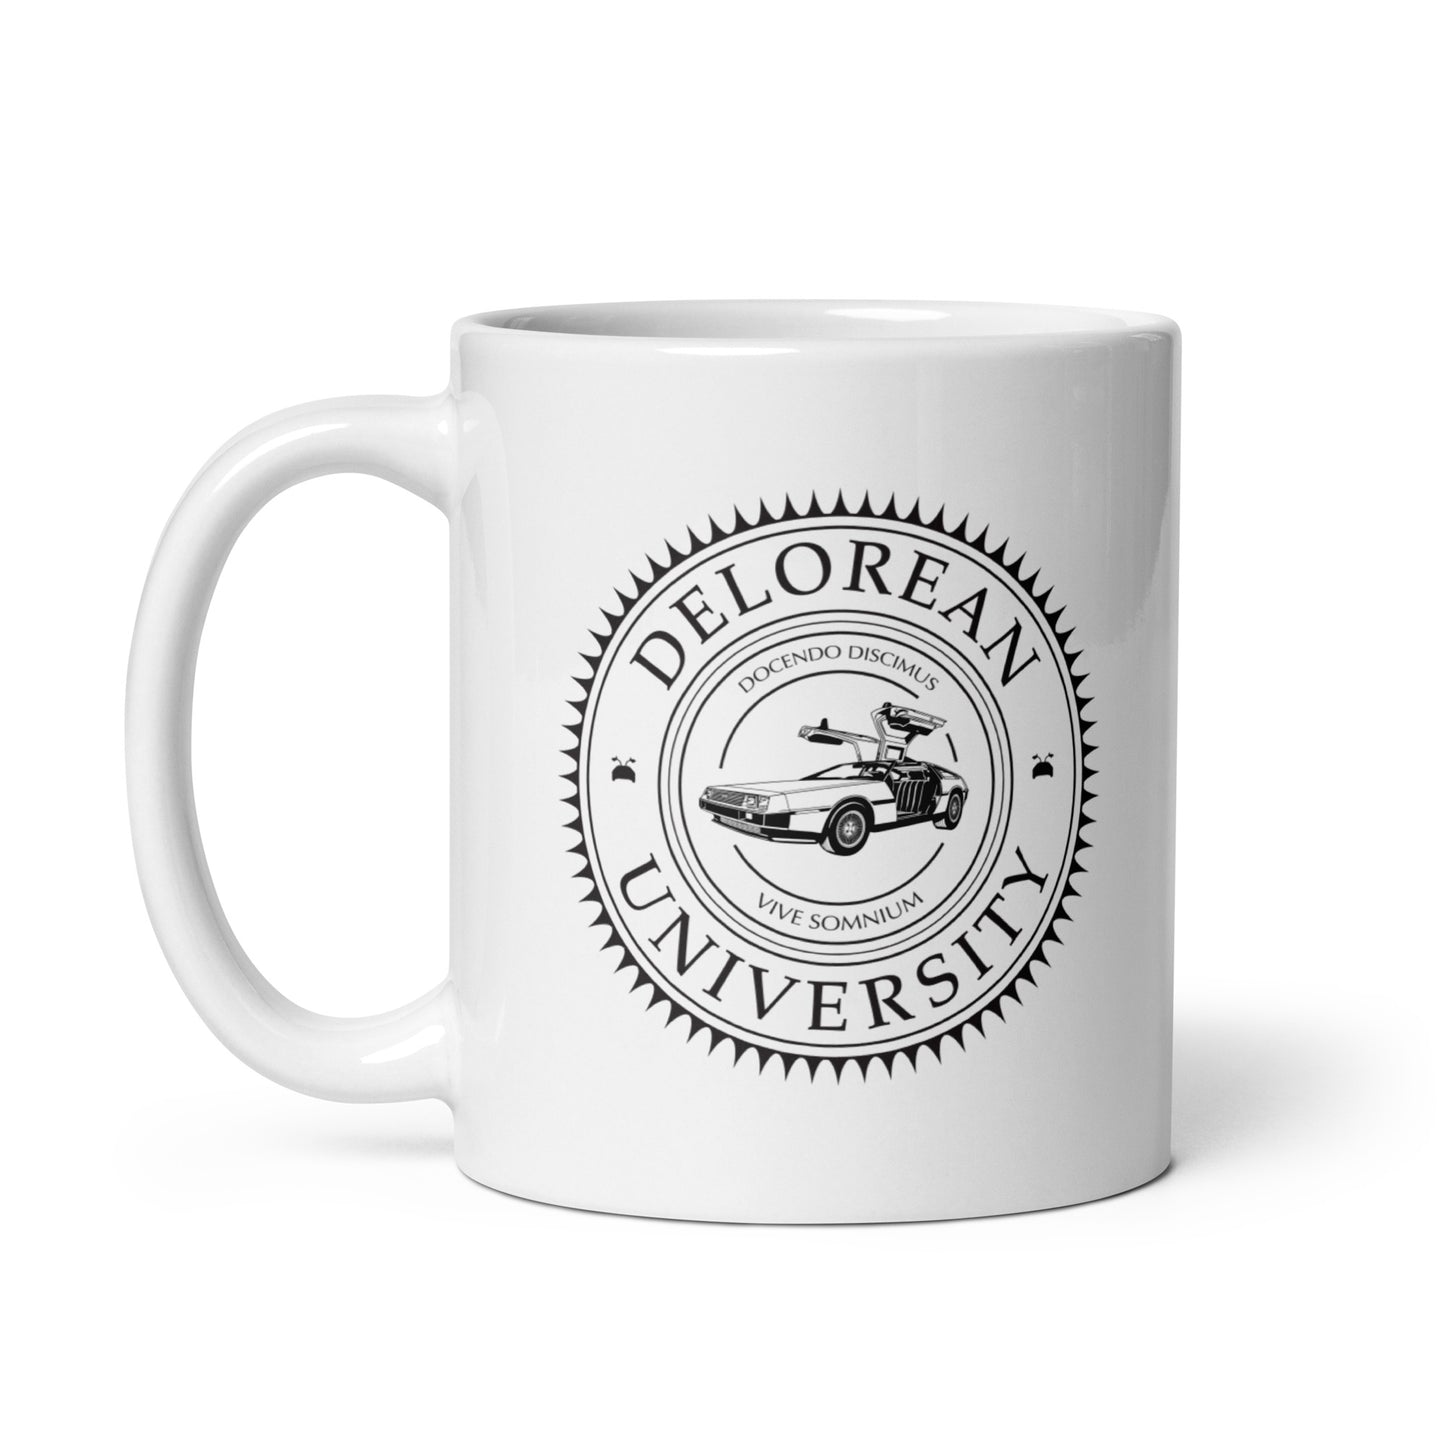 DeLorean University Mug